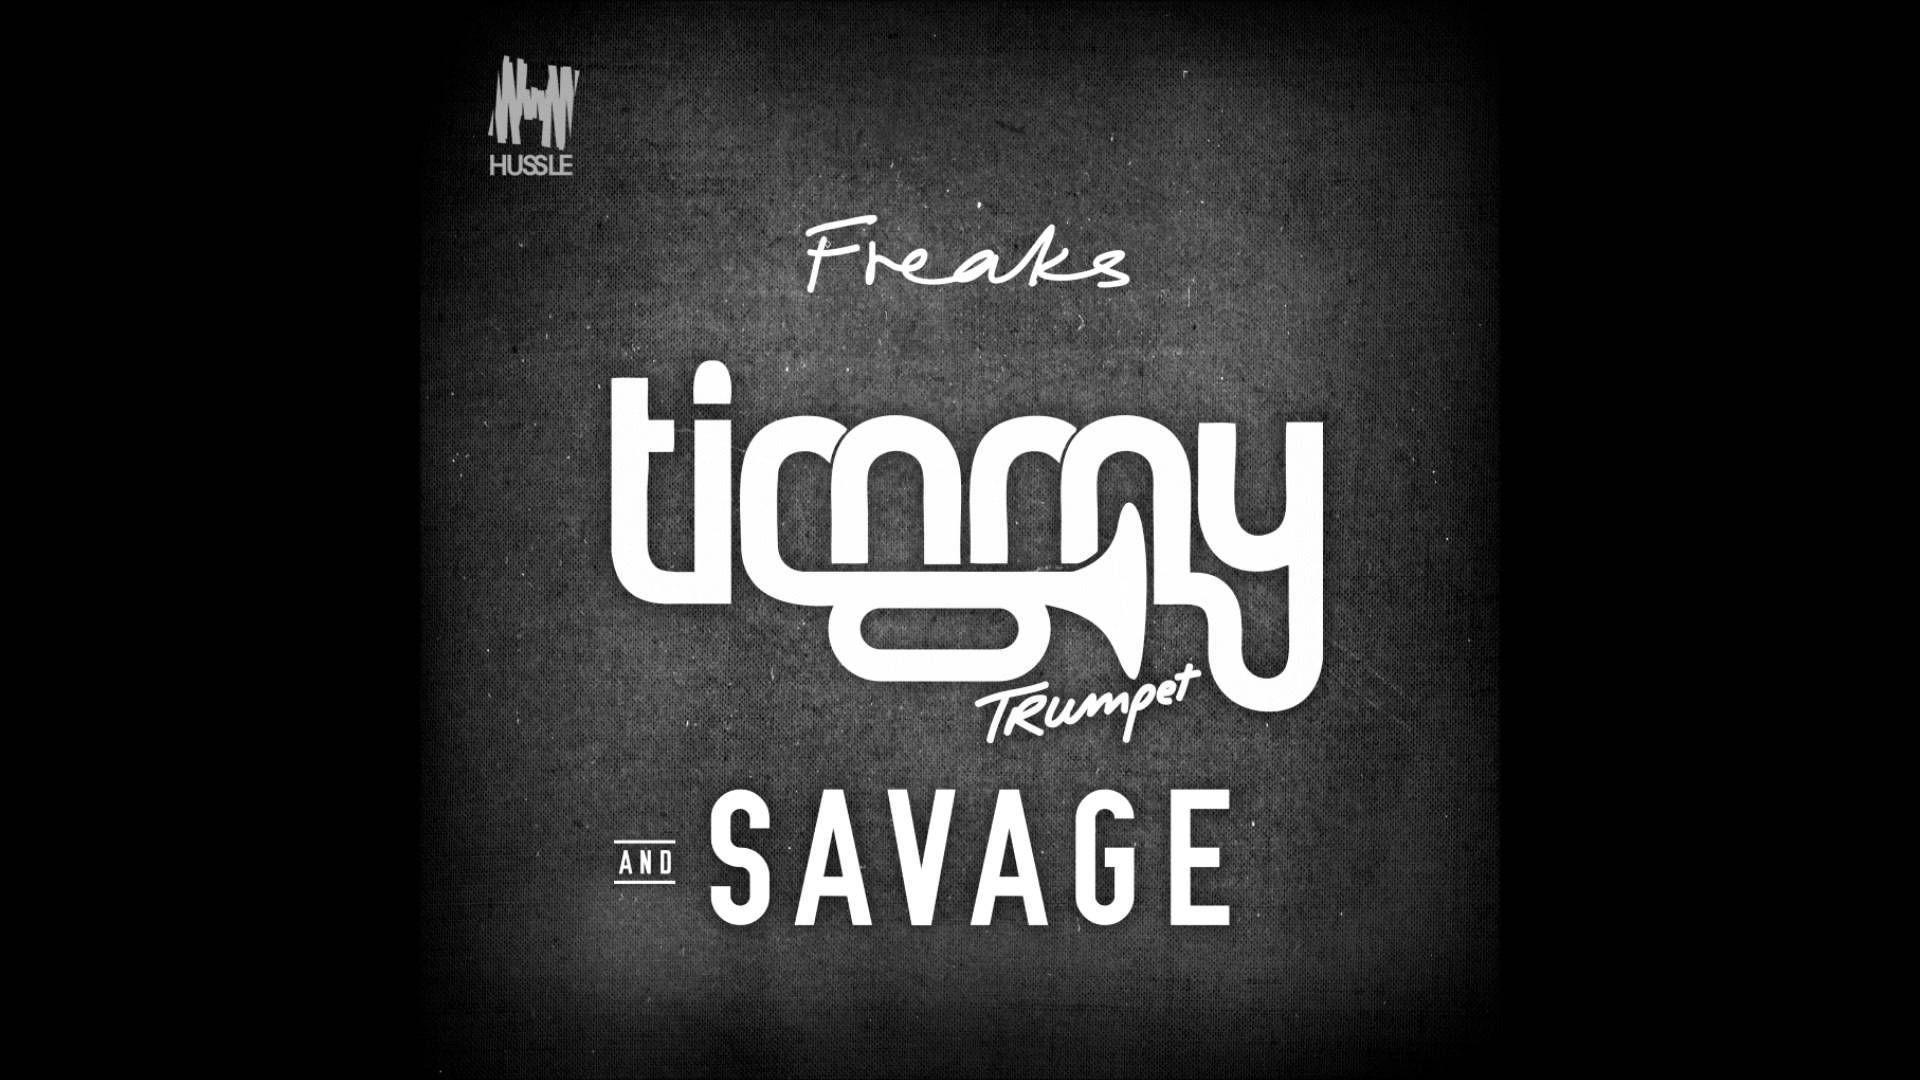 Timmy Trumpet & Savage. Music videos and videos